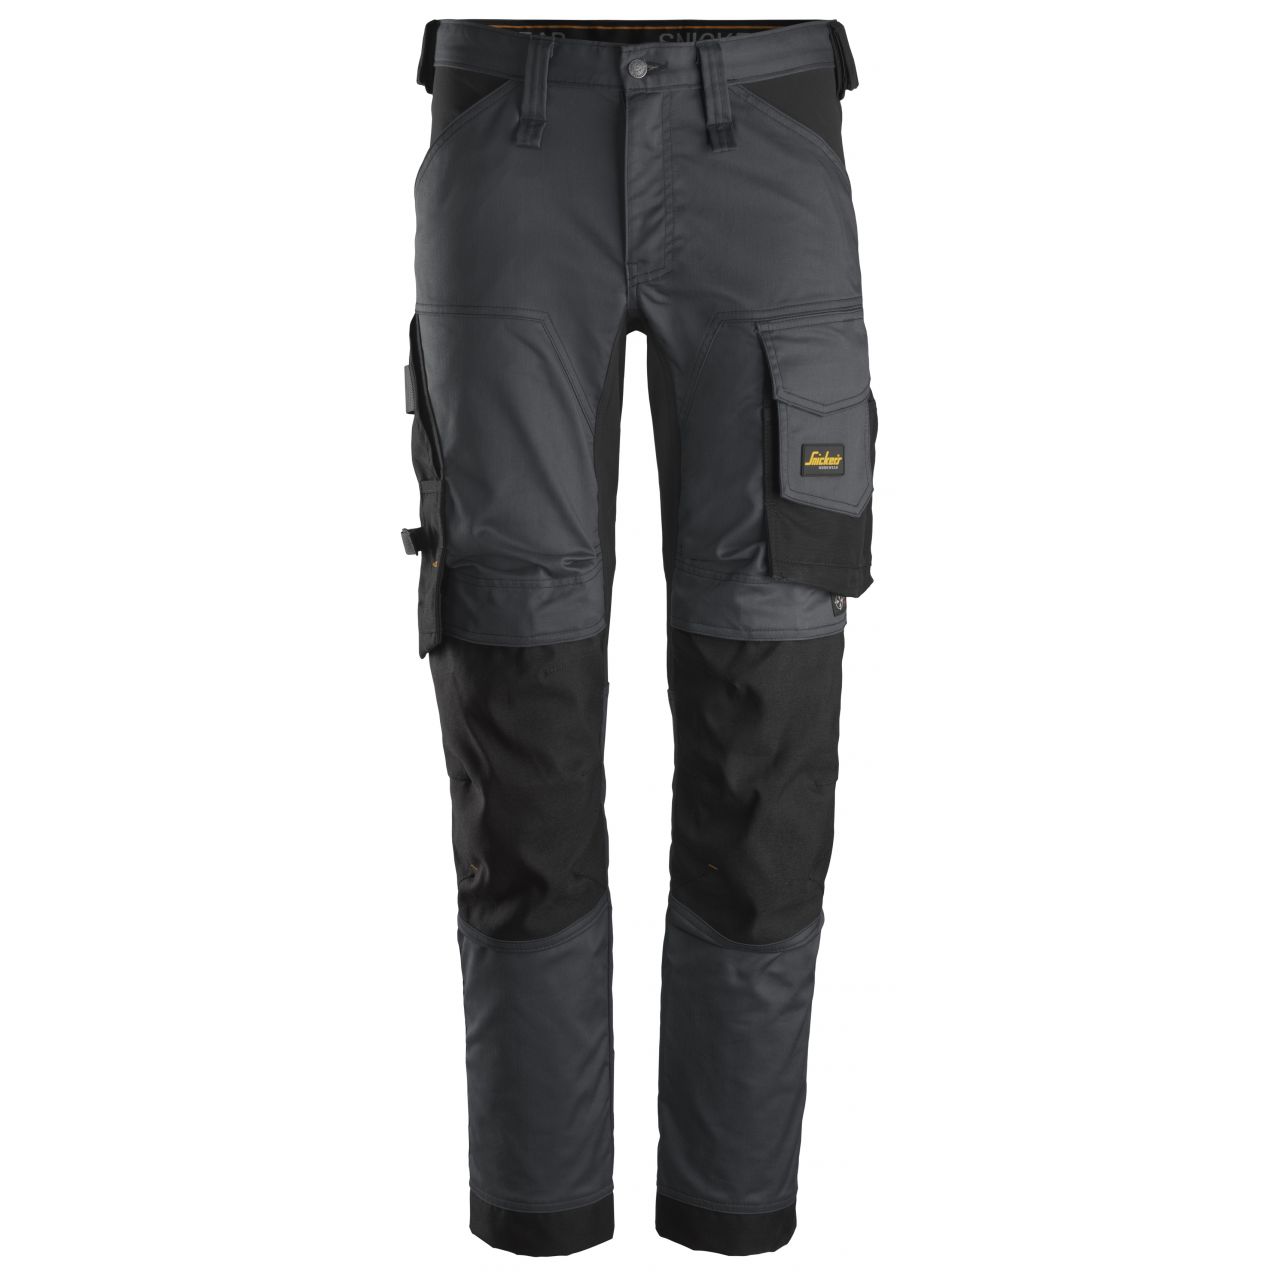 Pantalones elásticos AllroundWork Gris Acero-Negro talla 108